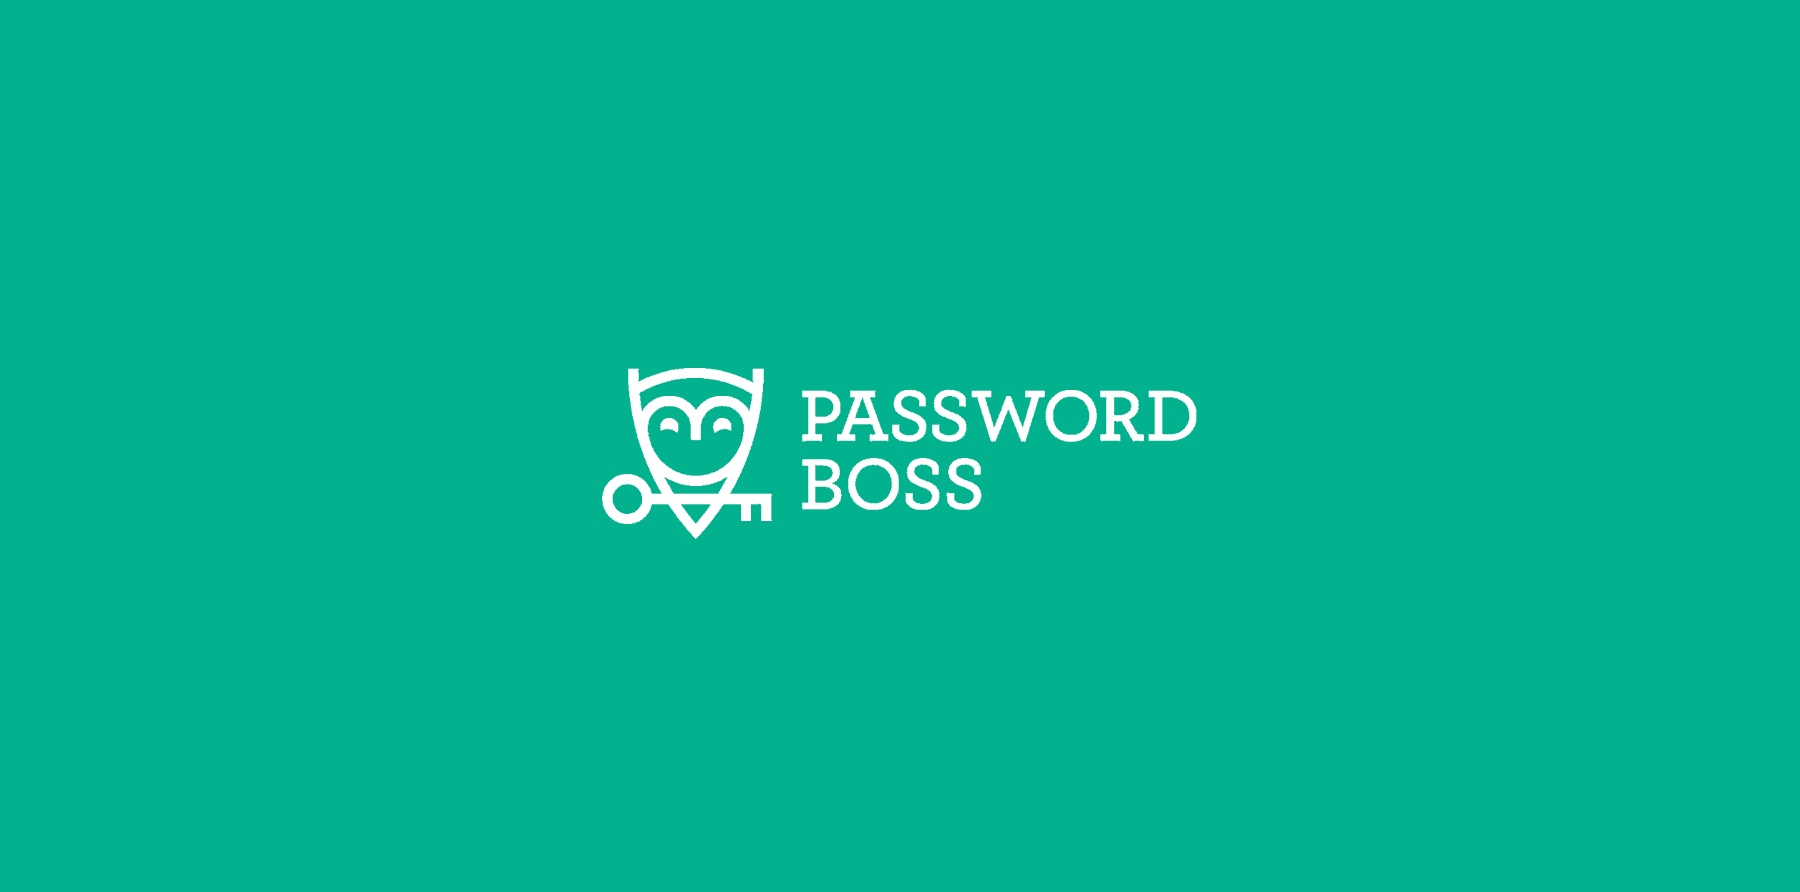 Password boss